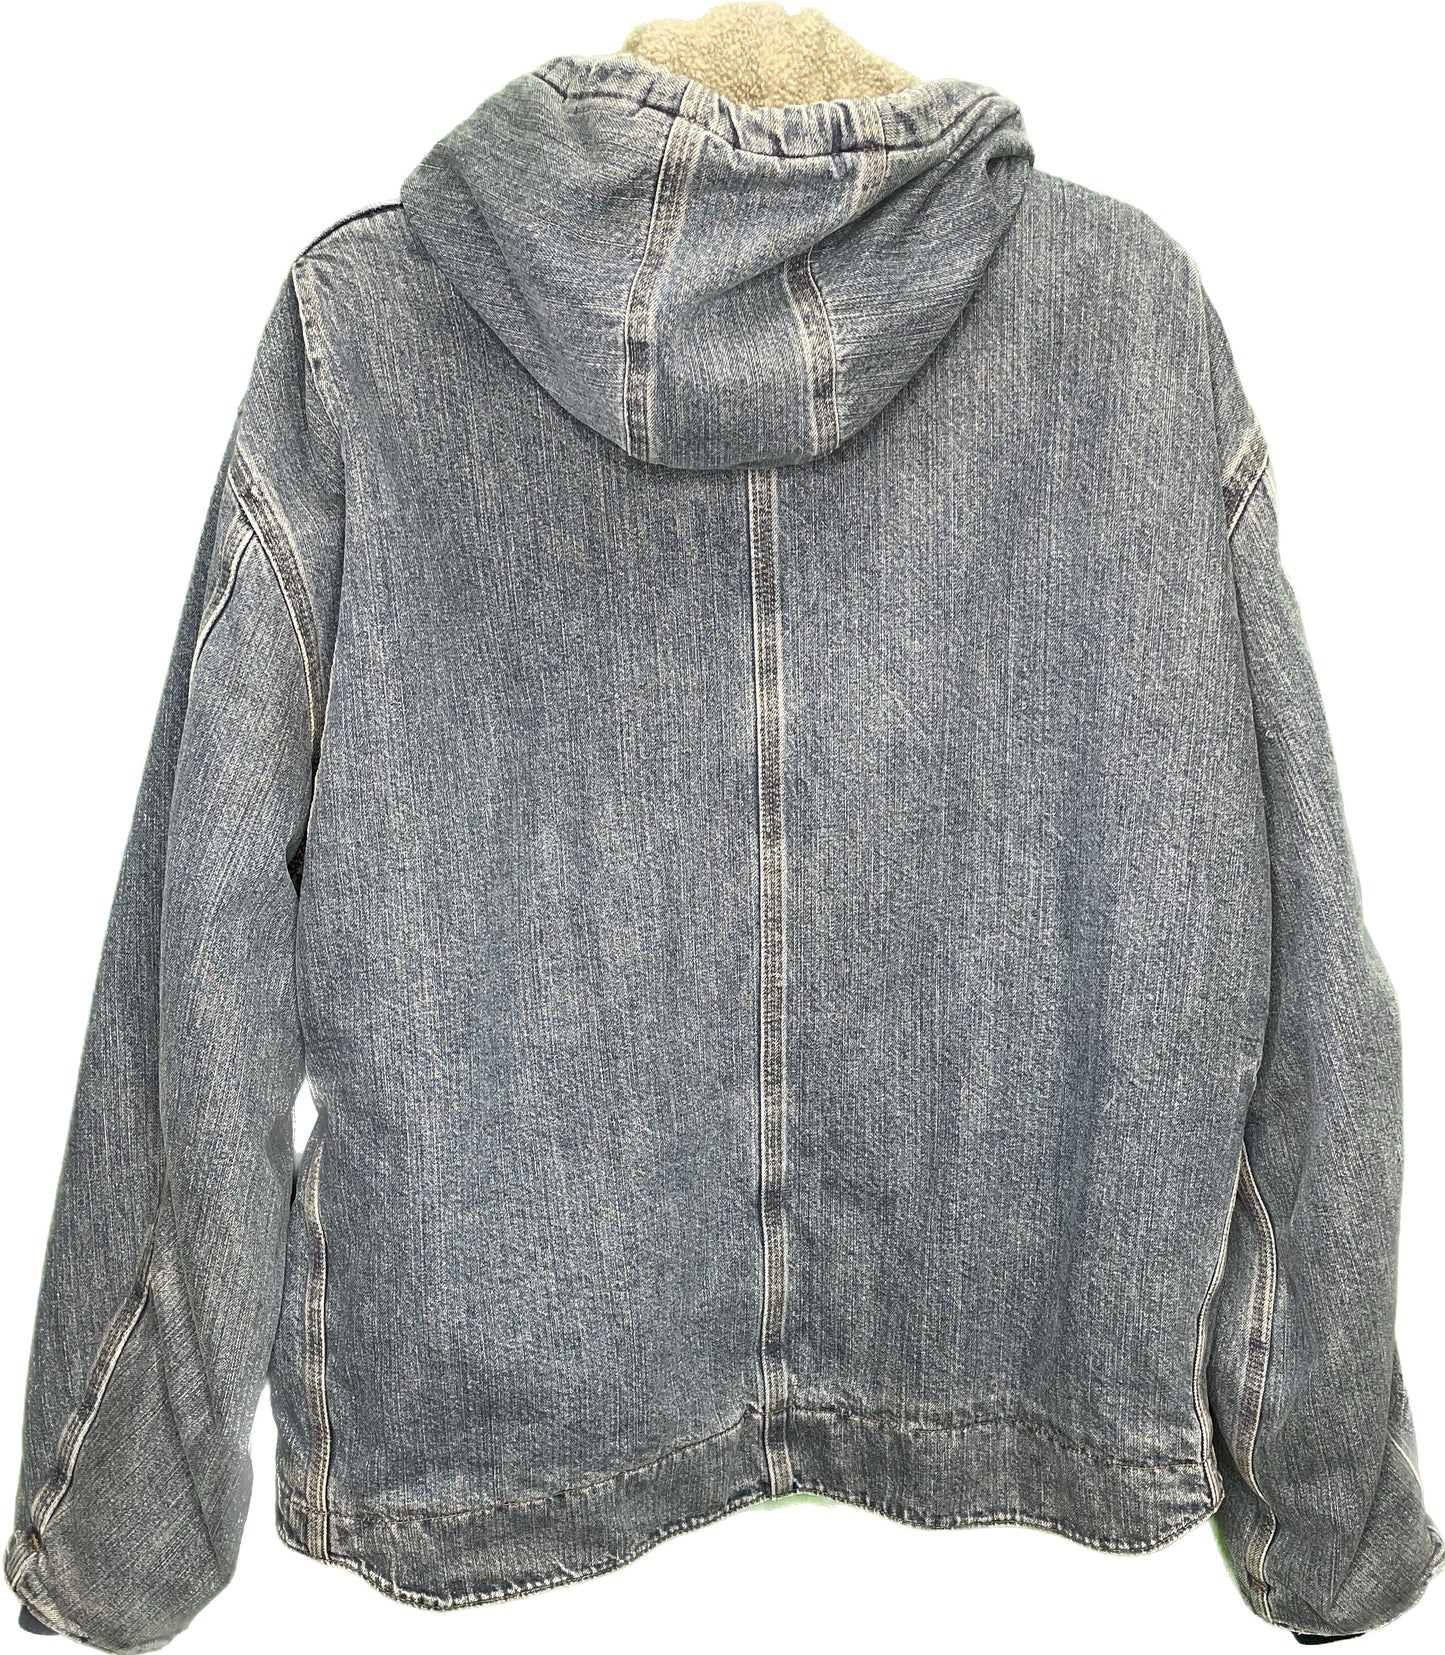 Vintage 3XL Sherpa Lined Hooded Carhartt Jacket